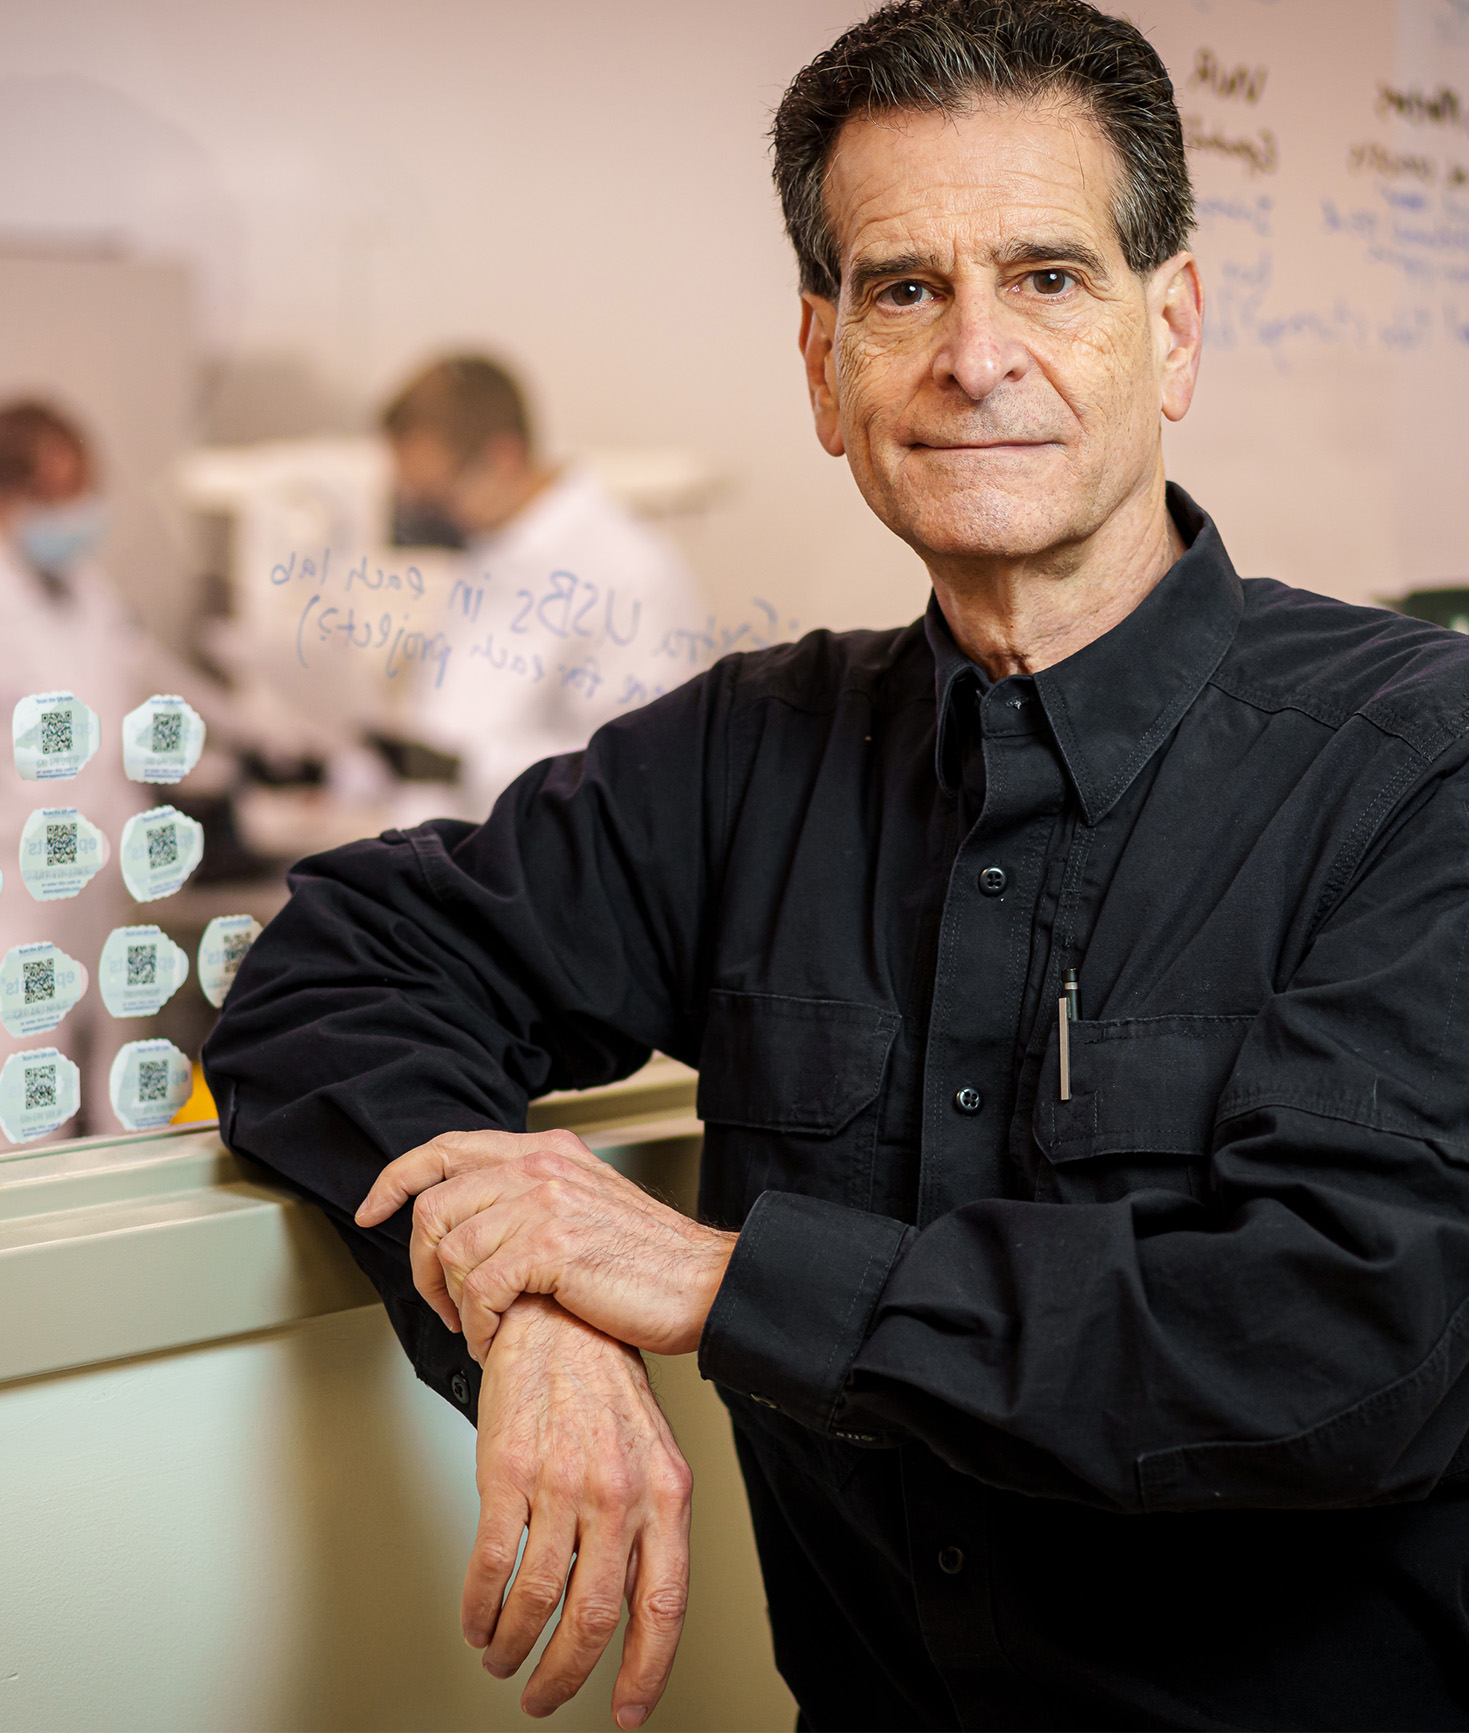 40 Influential Leaders - Dean Kamen